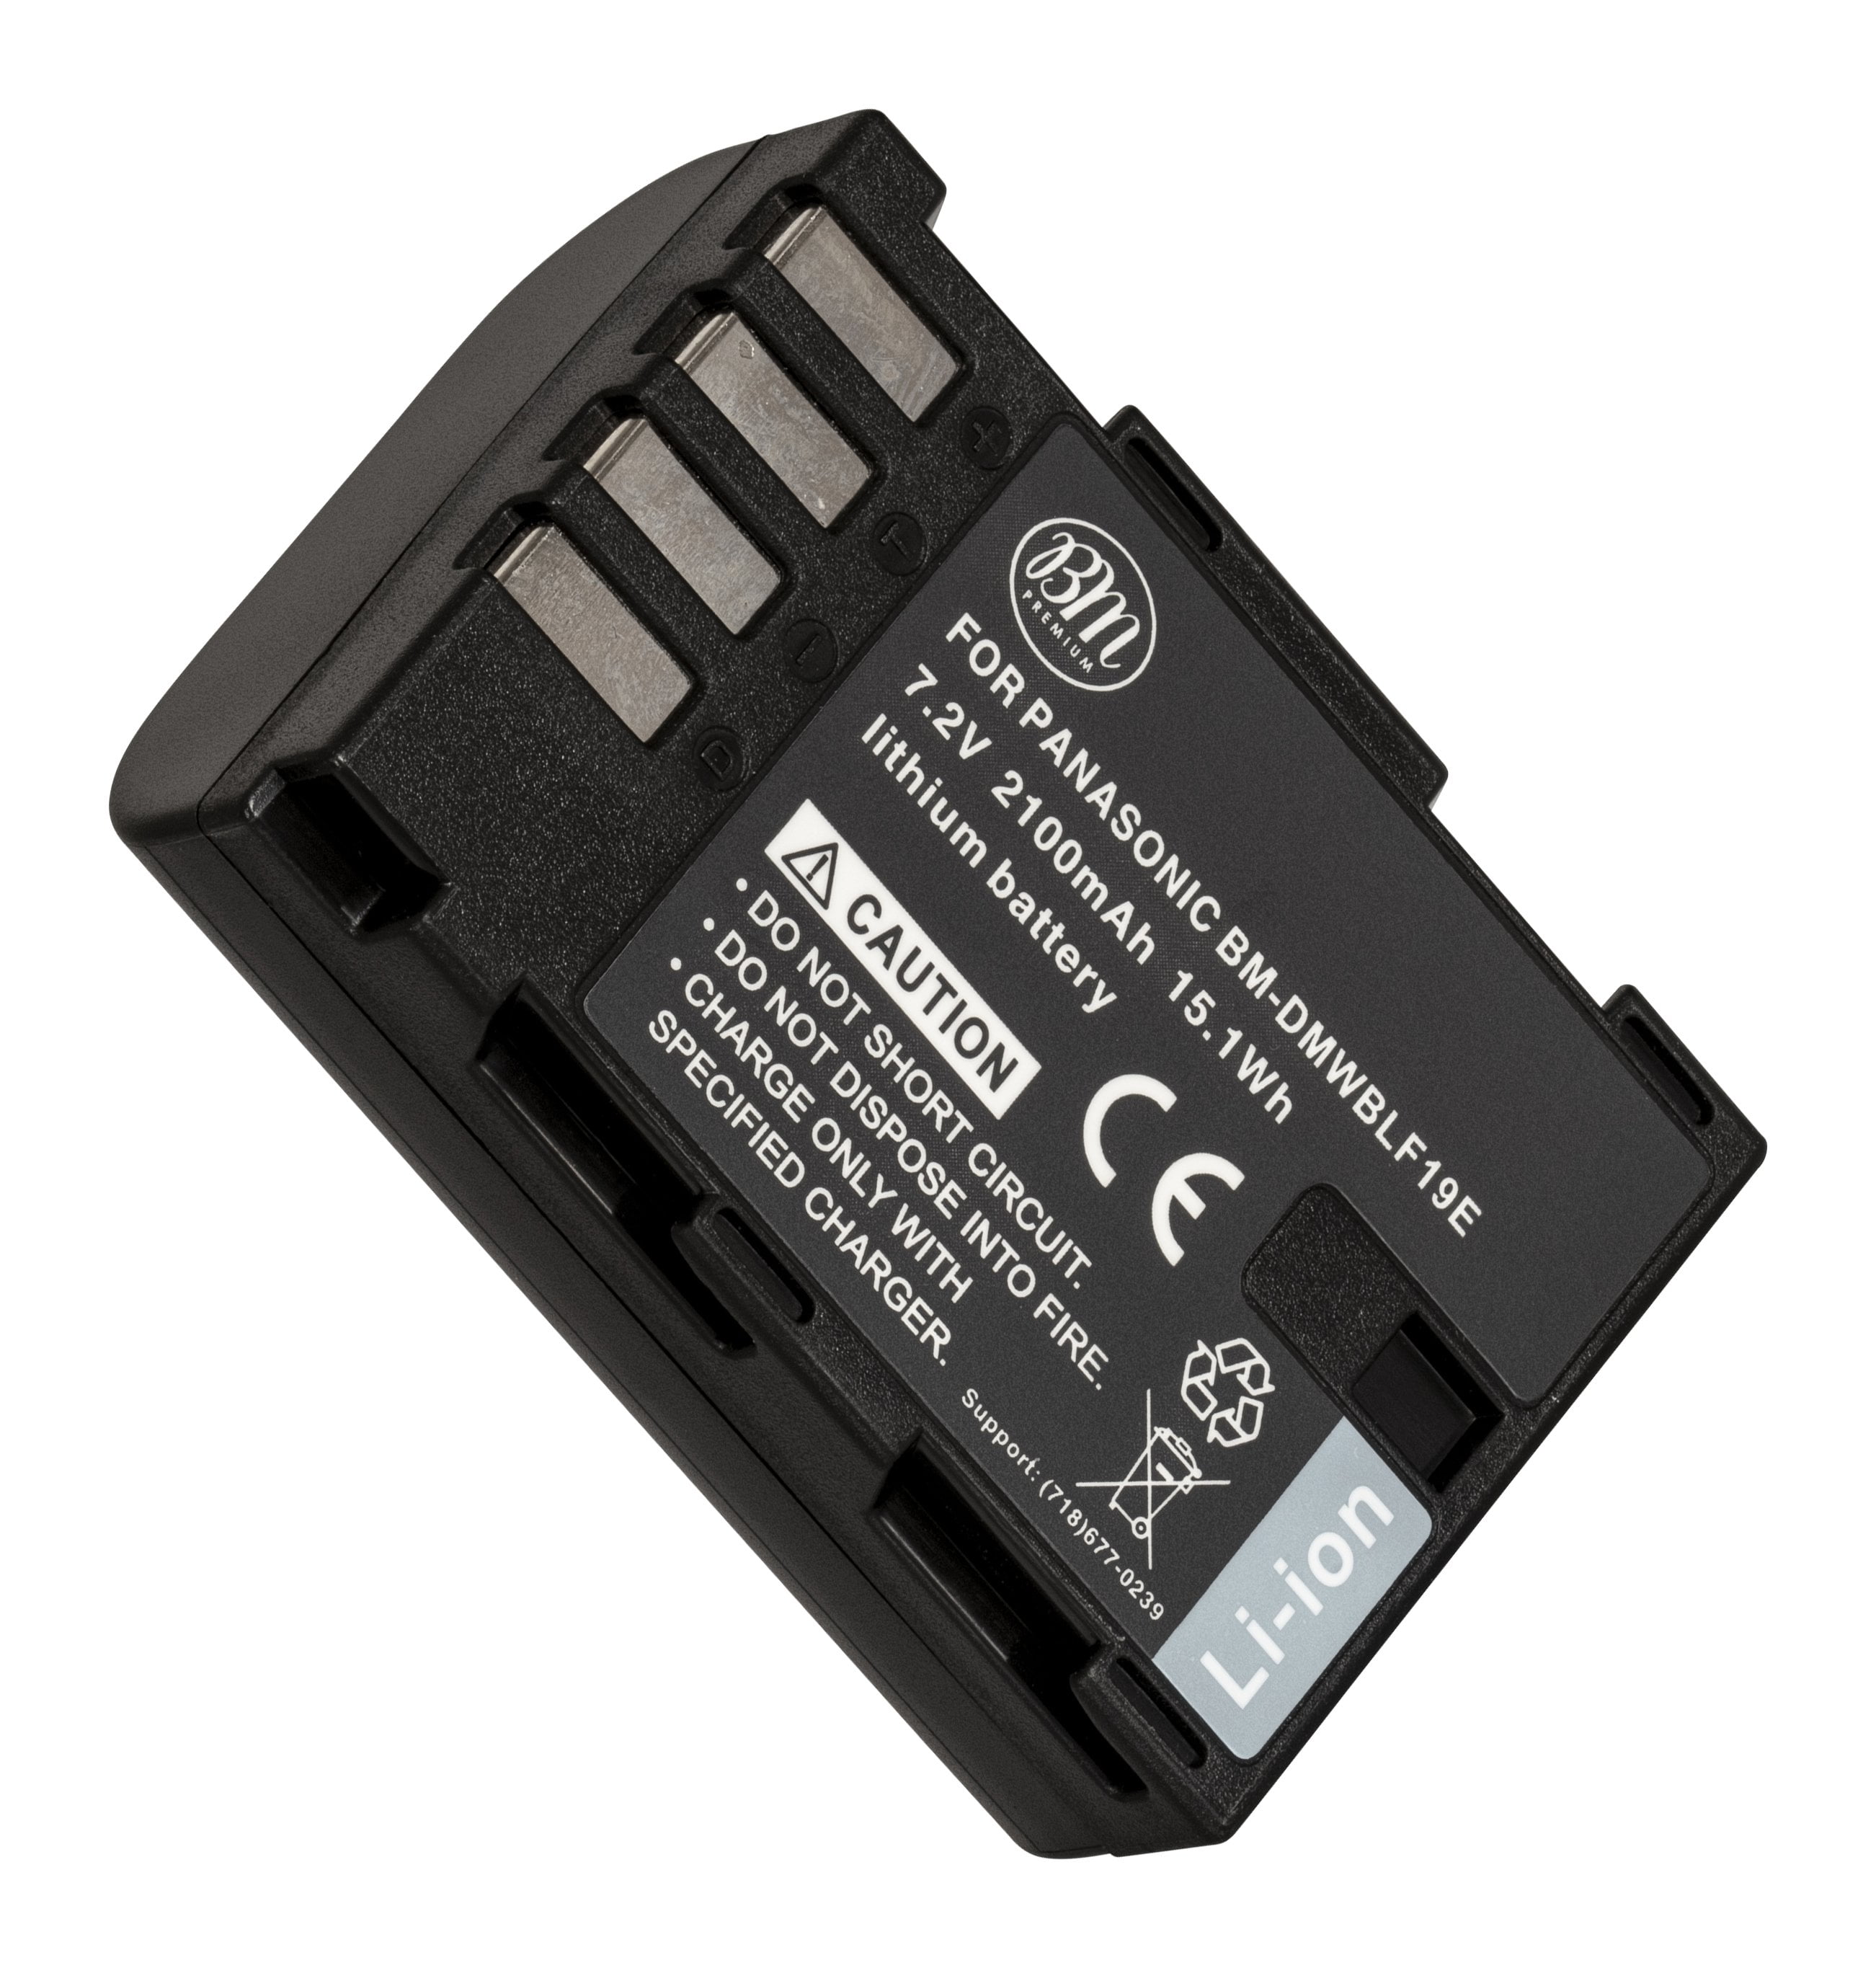 DMC-GM5KK Digital Camera Battery 2 Pack for Panasonic Lumix DMC-GM5 